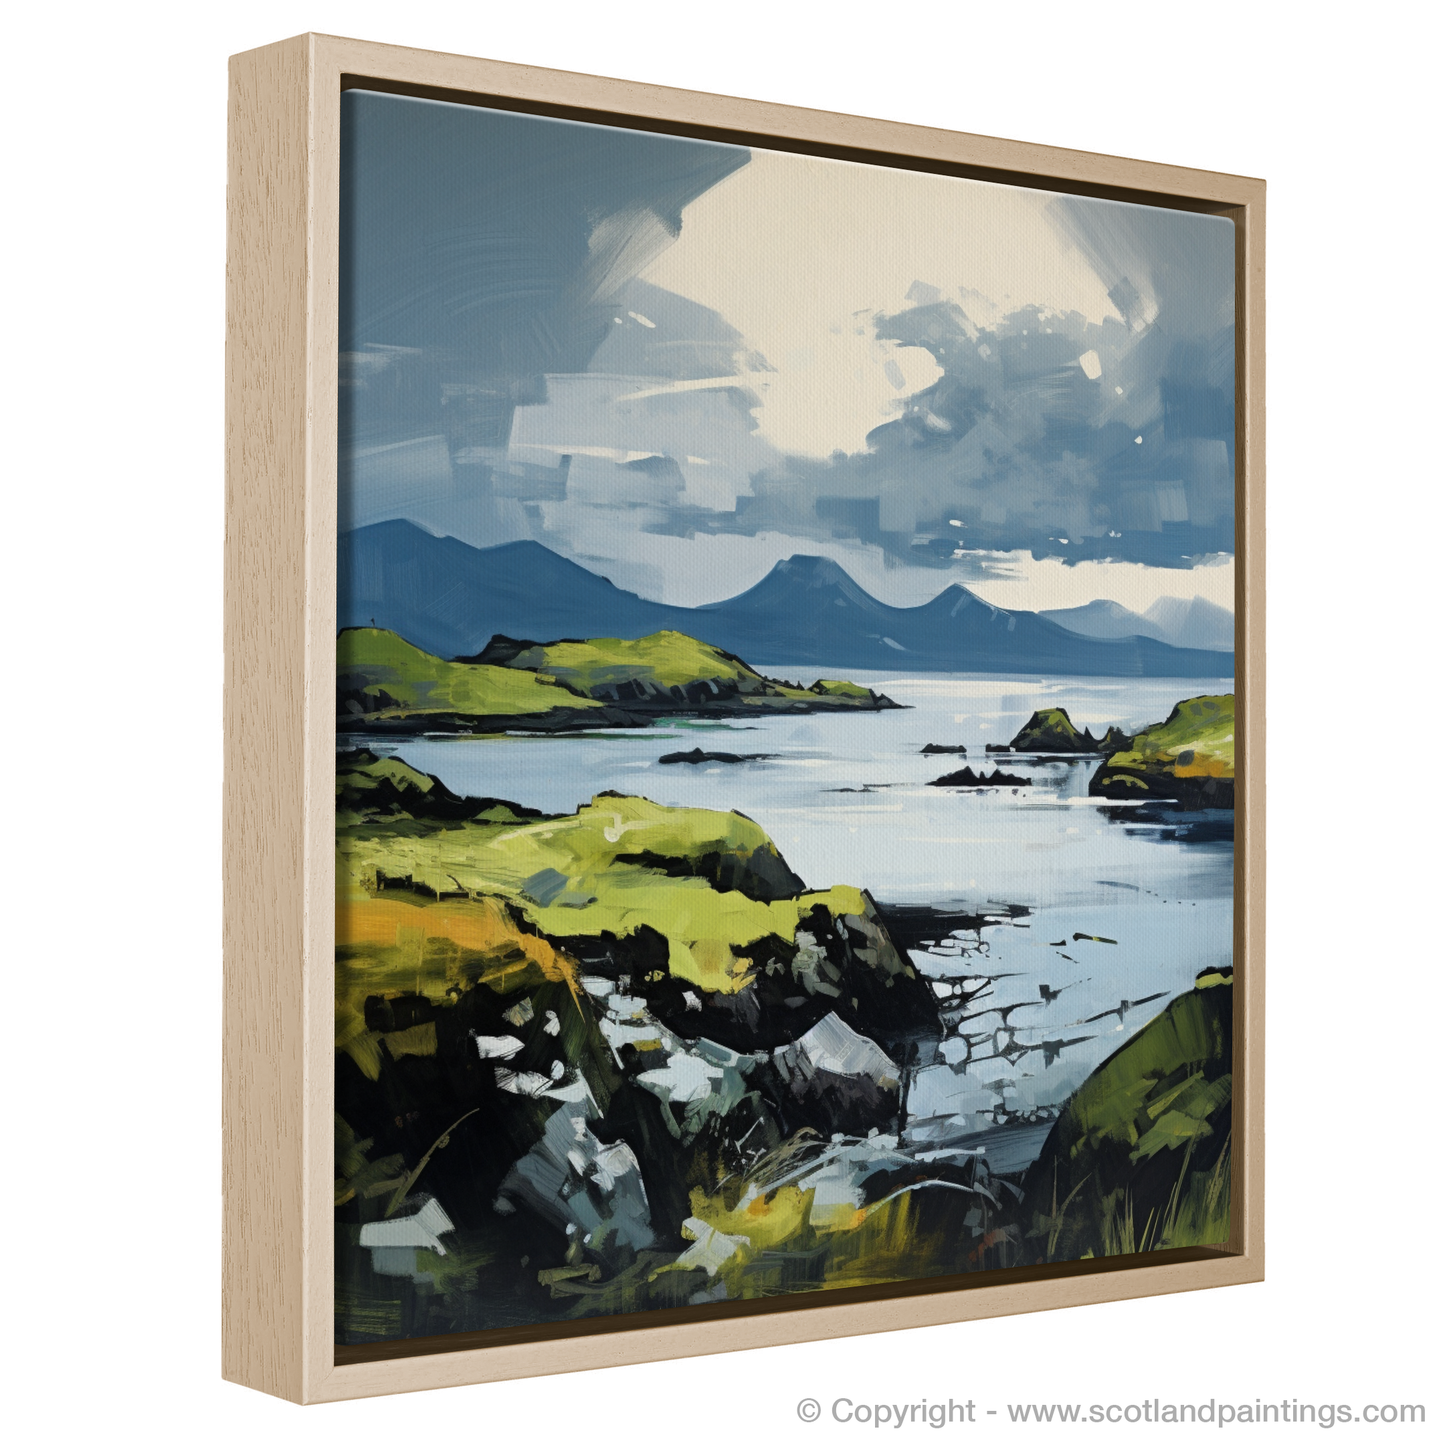 Painting and Art Print of Isle of Raasay, Inner Hebrides in summer entitled "Summer Serenade on the Isle of Raasay".